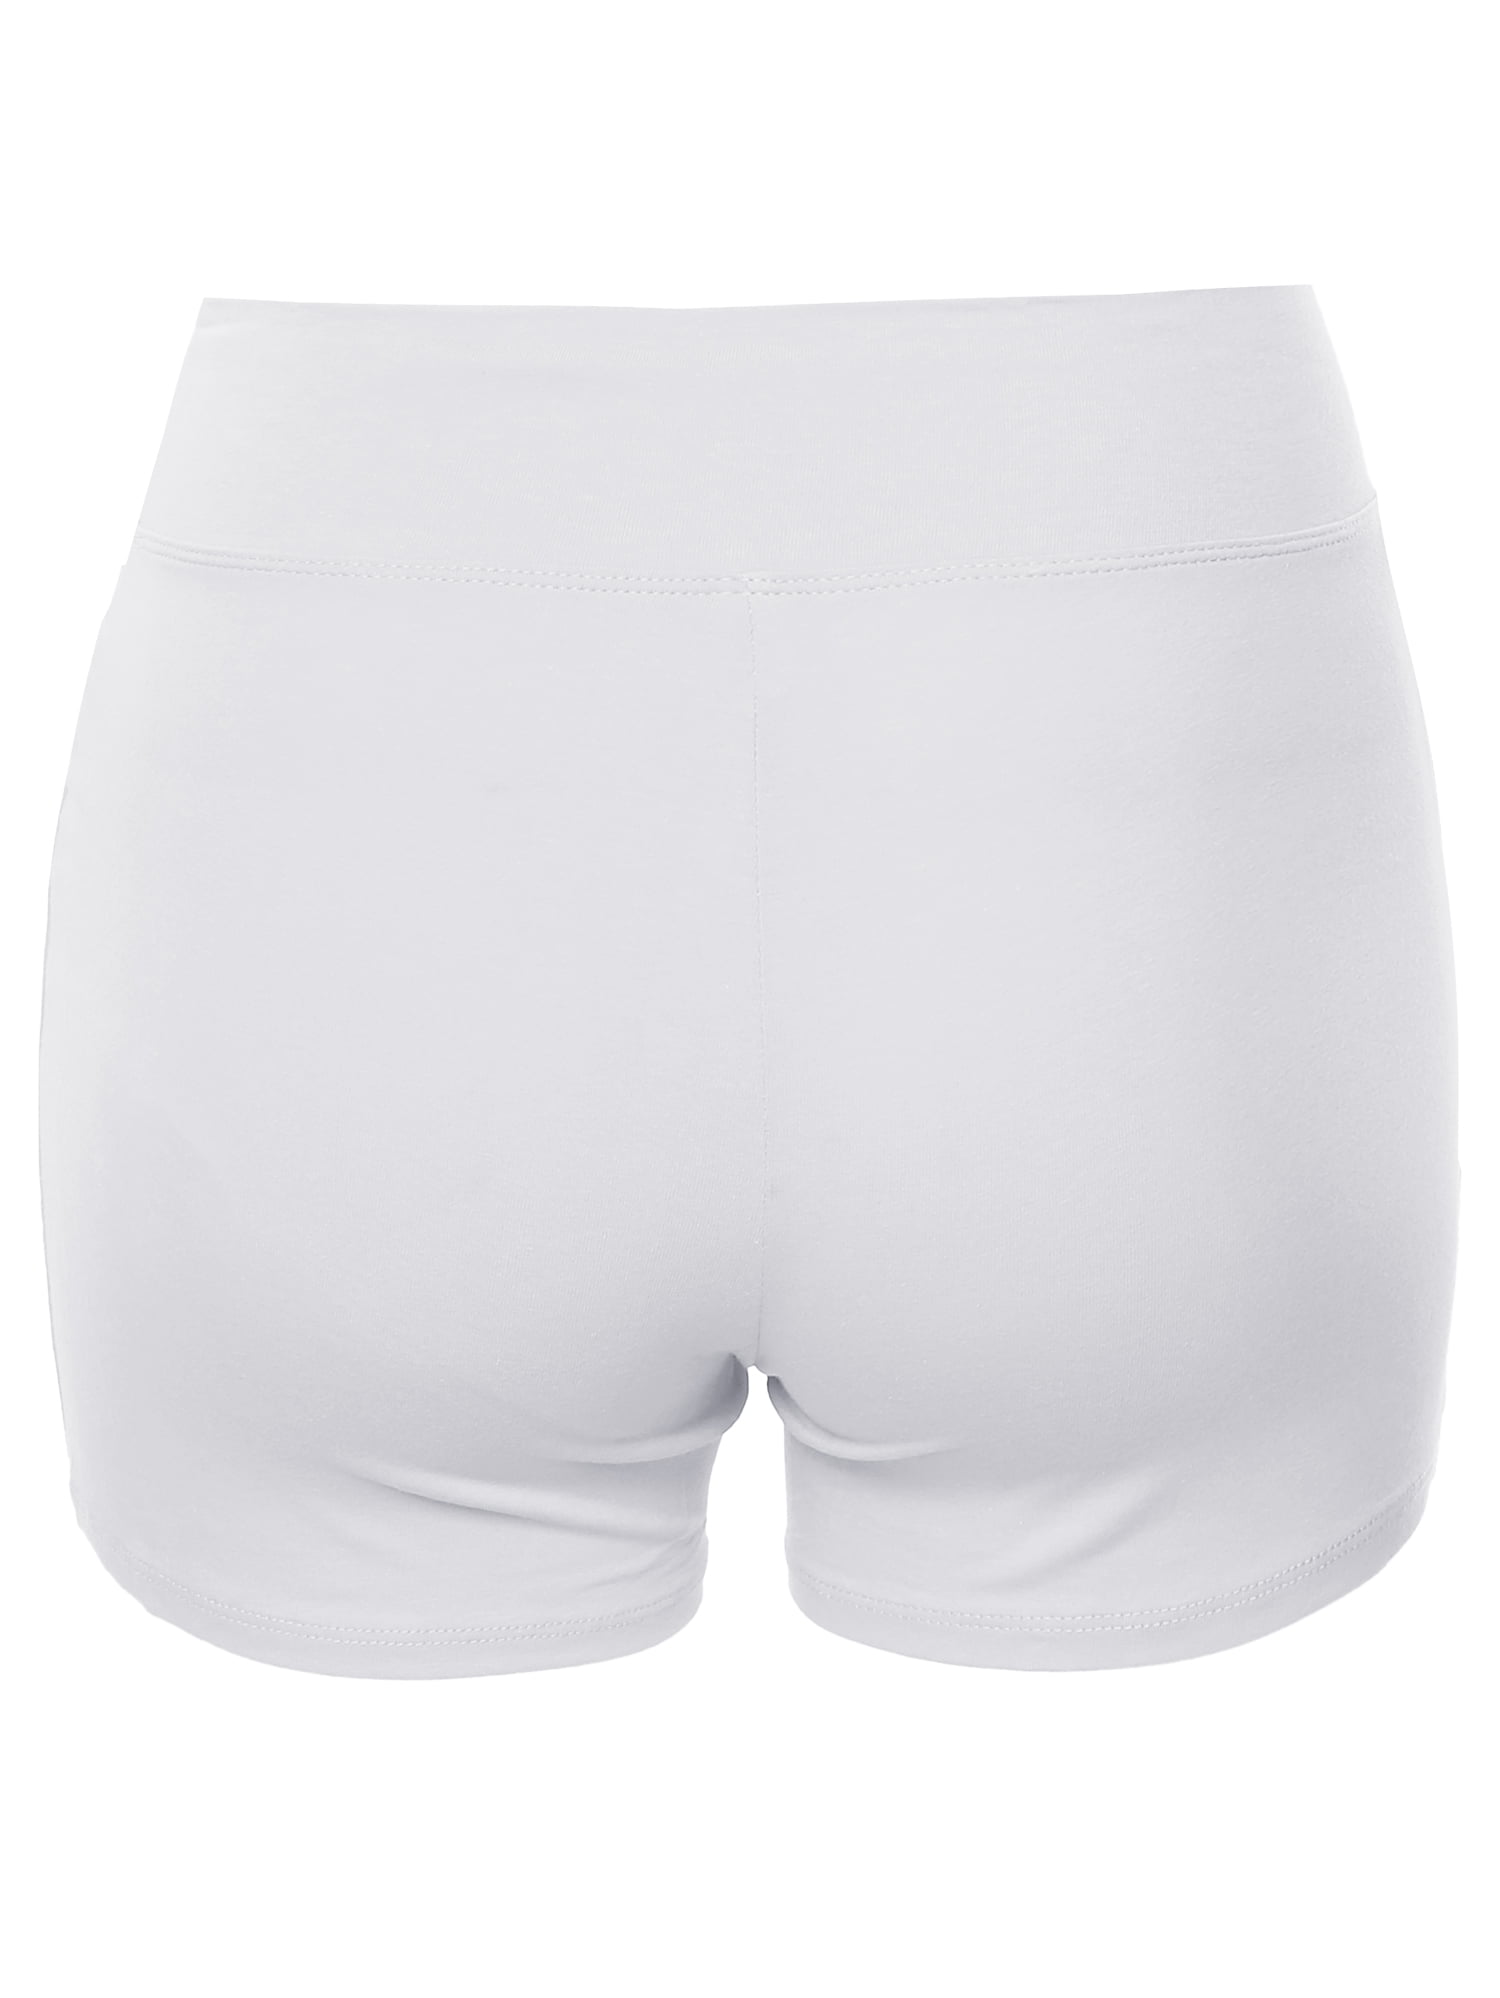 A2Y Women's Basic Solid Premium Cotton High Rise Bike Shorts White M